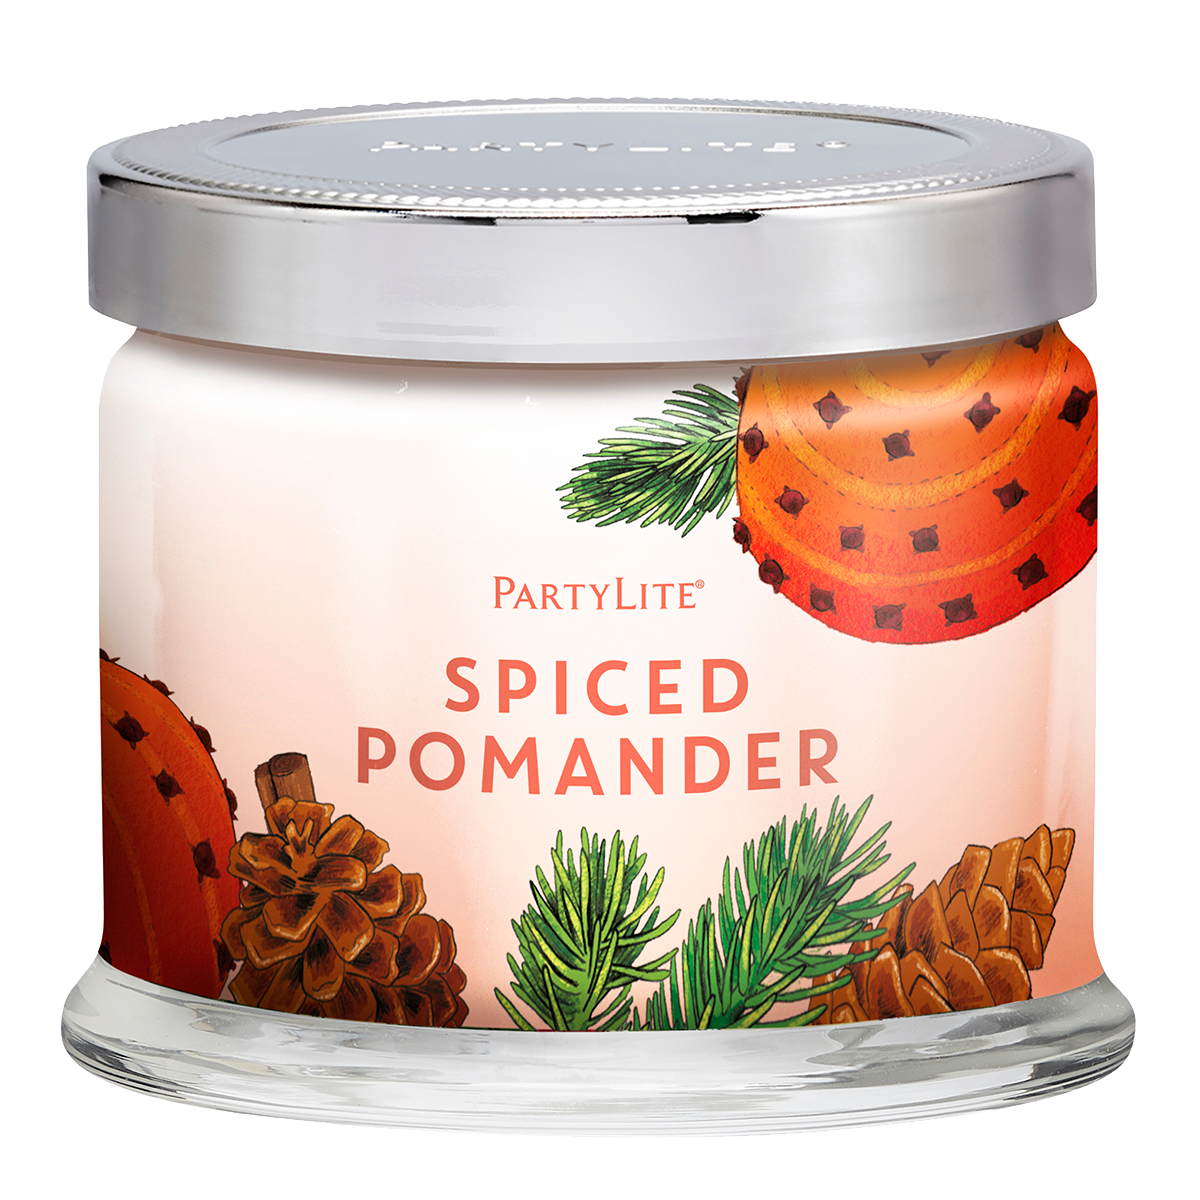 Spiced Pomander 3-Wick Jar Candle